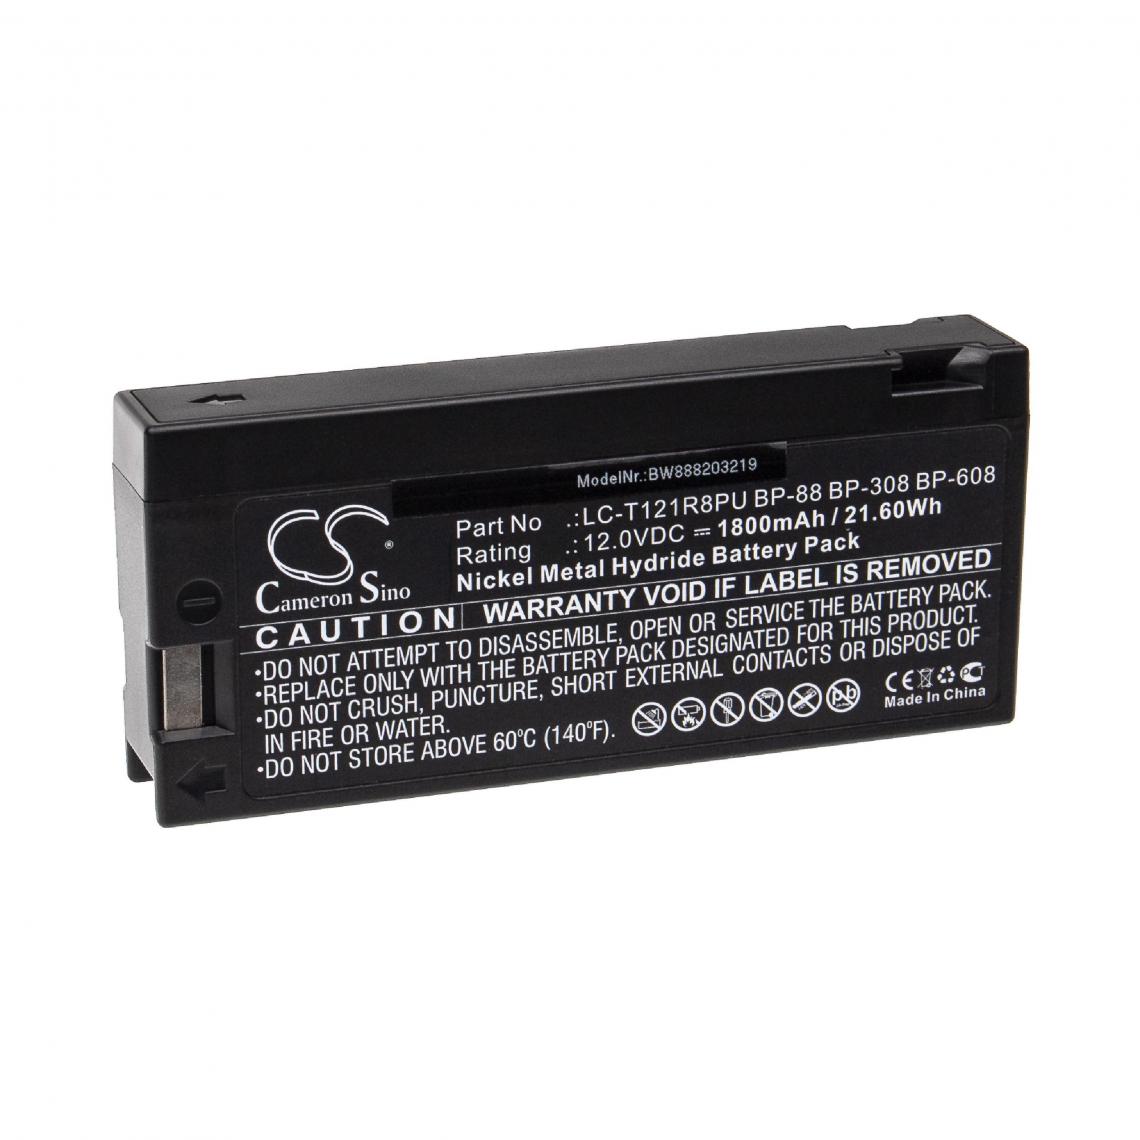 Vhbw - vhbw Batterie compatible avec MAGNAVOX CVM-315, CVM710, CVM-720, CVN-310AV, CVR-325AV, CVR-330AV appareil médical (1800mAh, 12V, NiMH) - Piles spécifiques